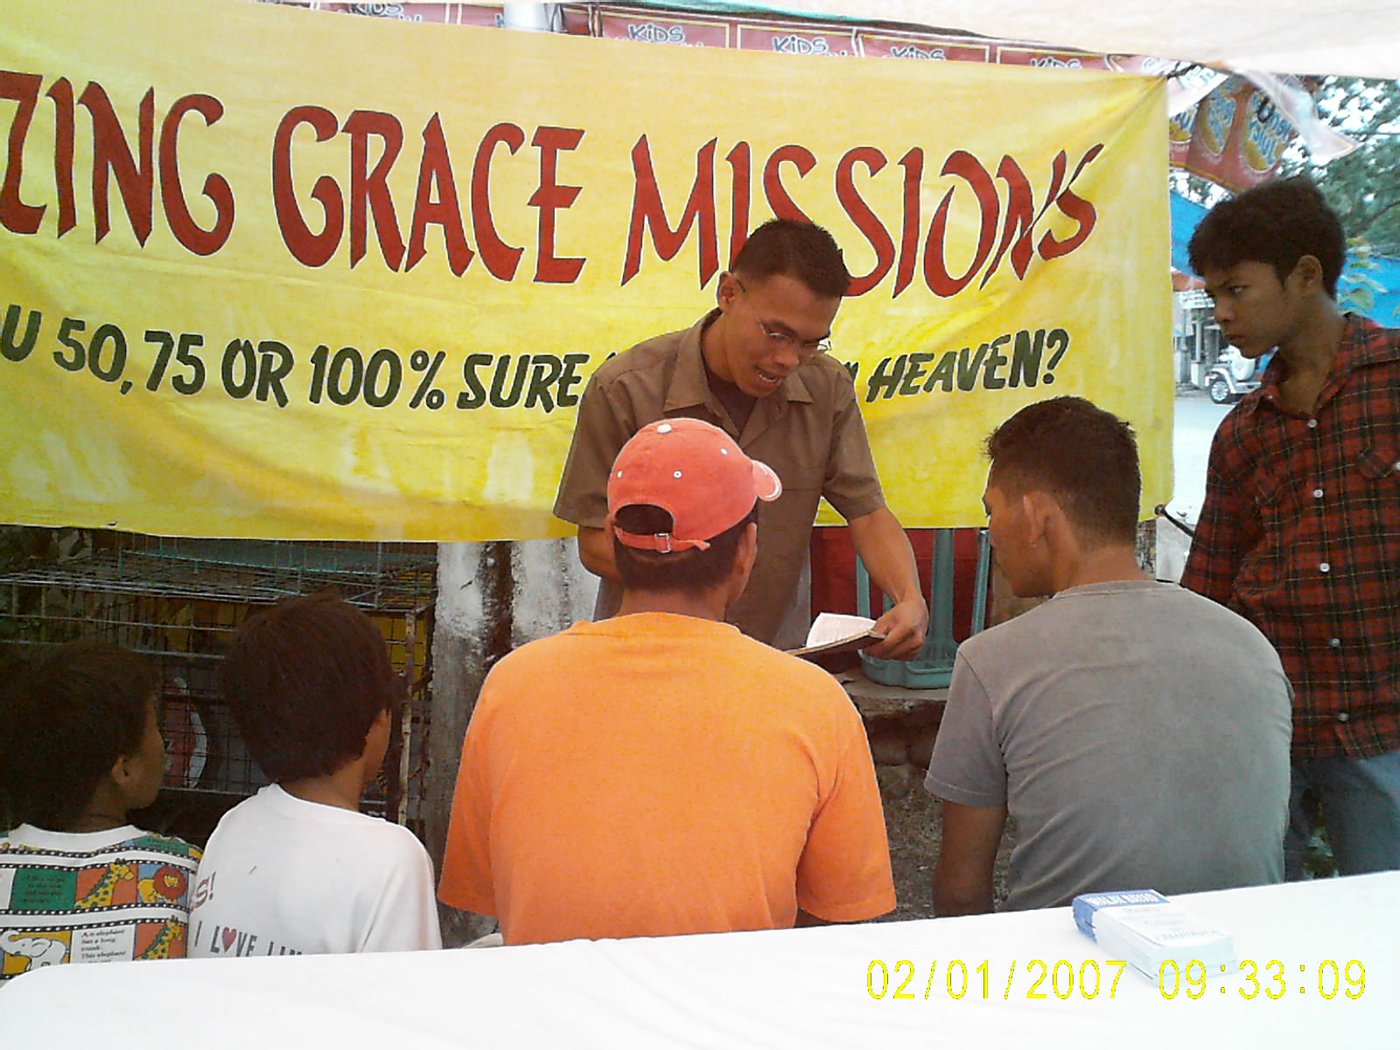 Amazing Grace Mission Philippines